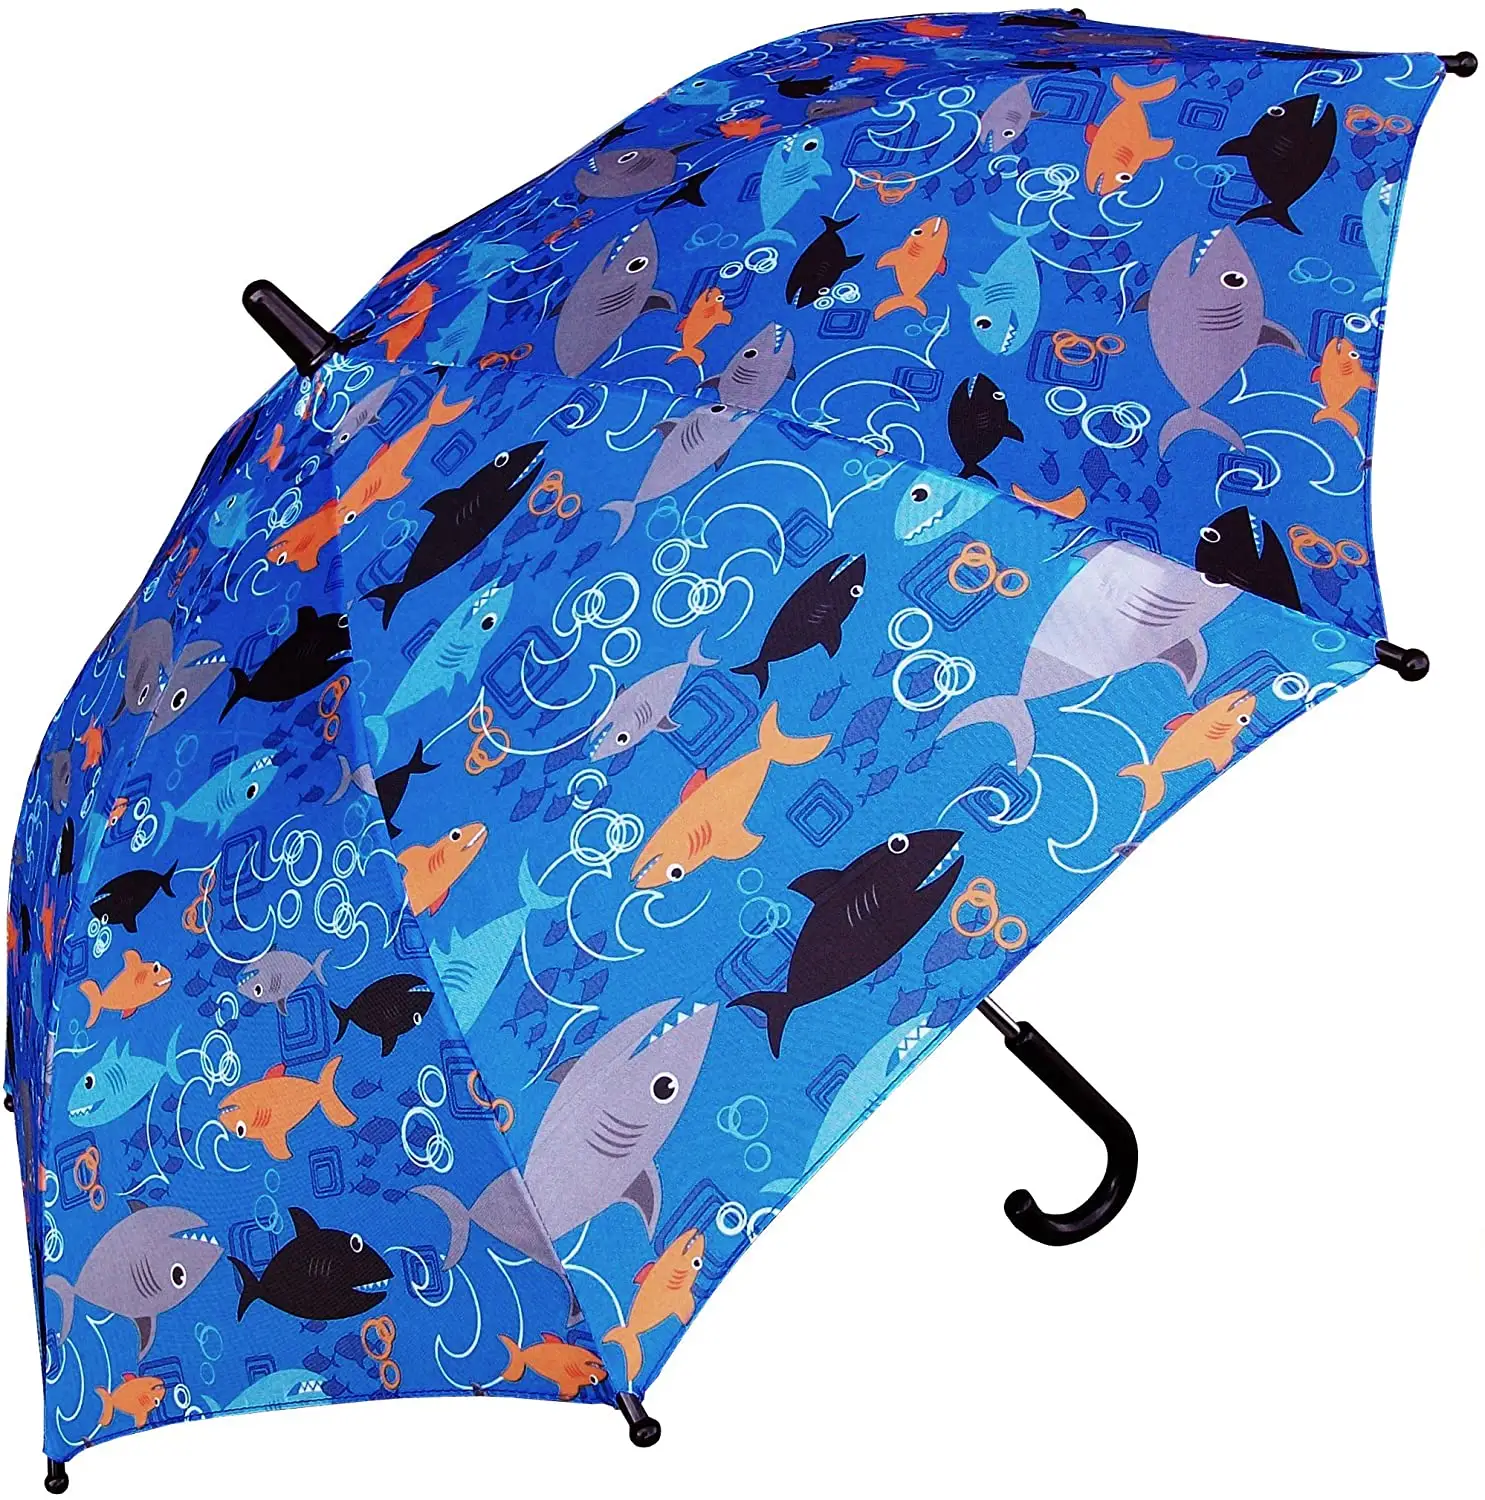 Voller Sublimation druck niedlicher kleiner Junge Regenschirm Meeres welt drucken niedlichen Kinder regenschirm